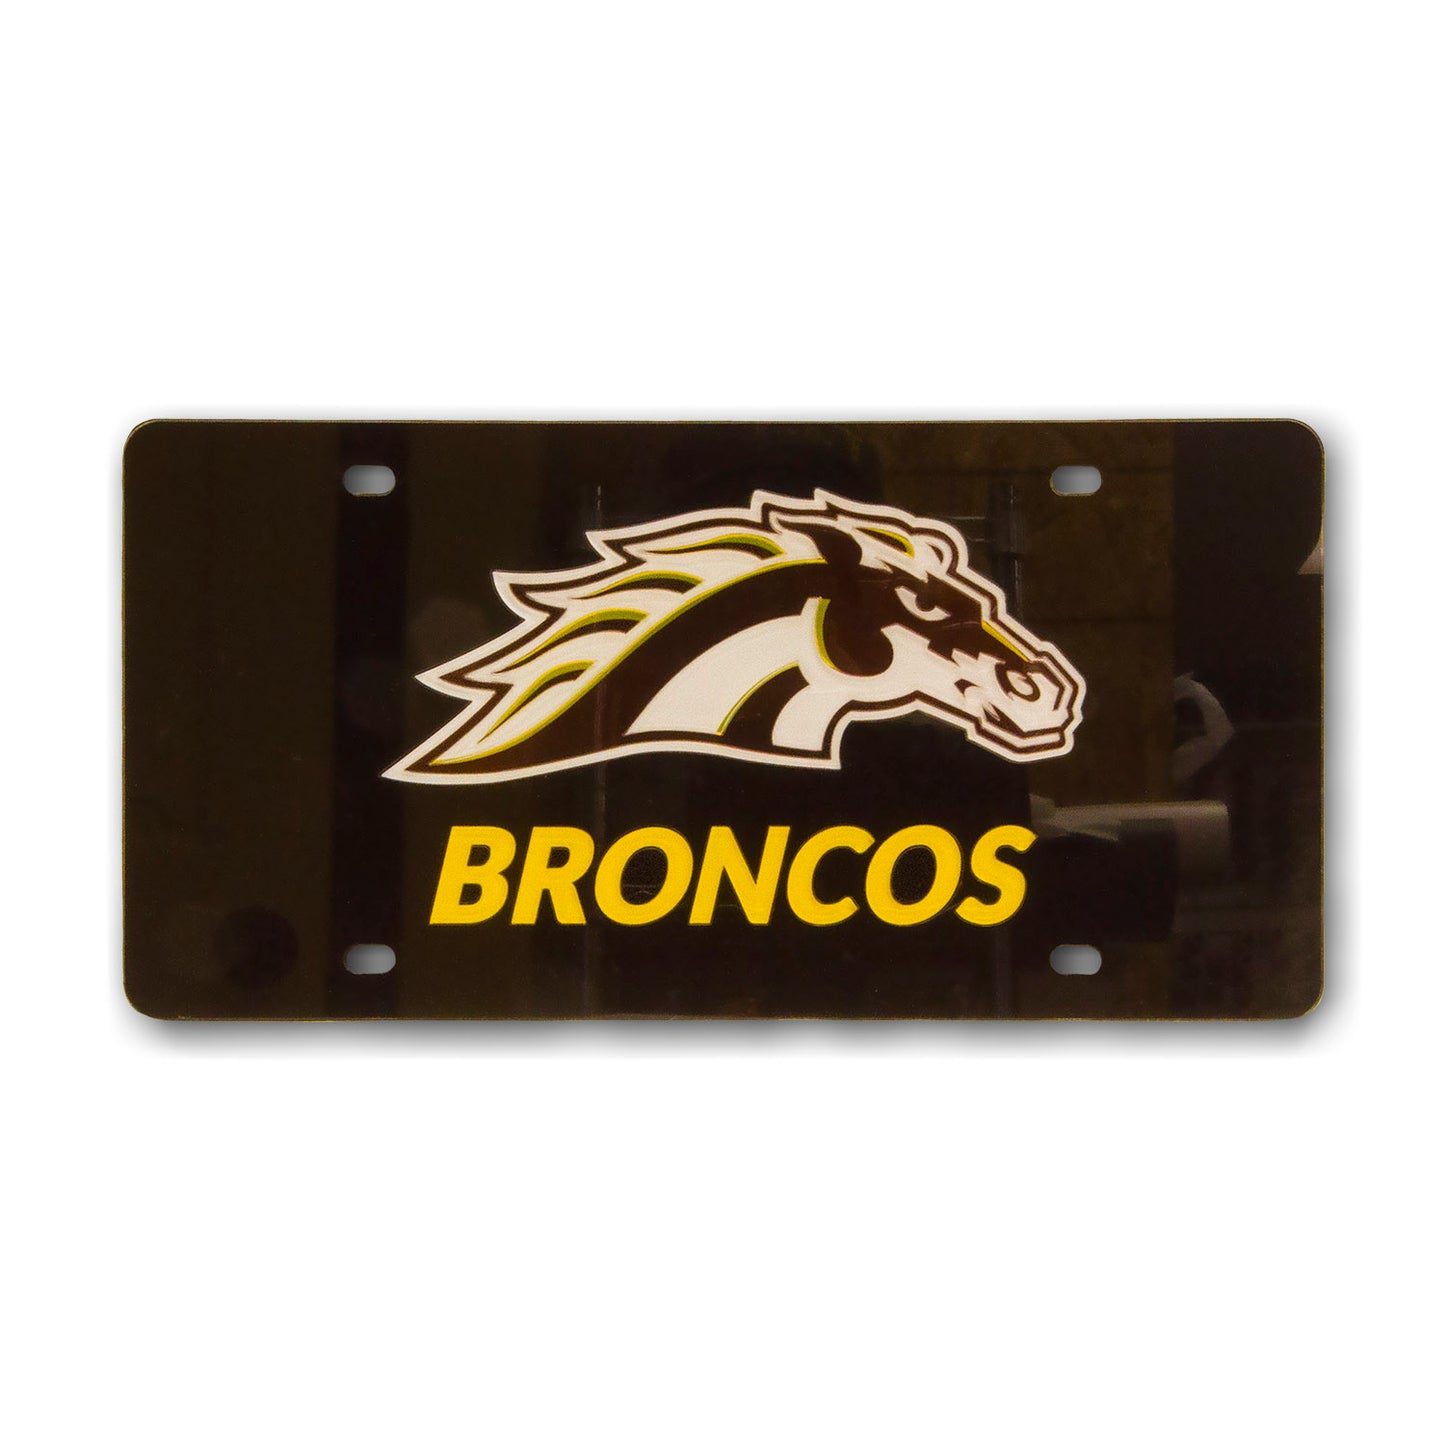 Broncos Decorative License Plate